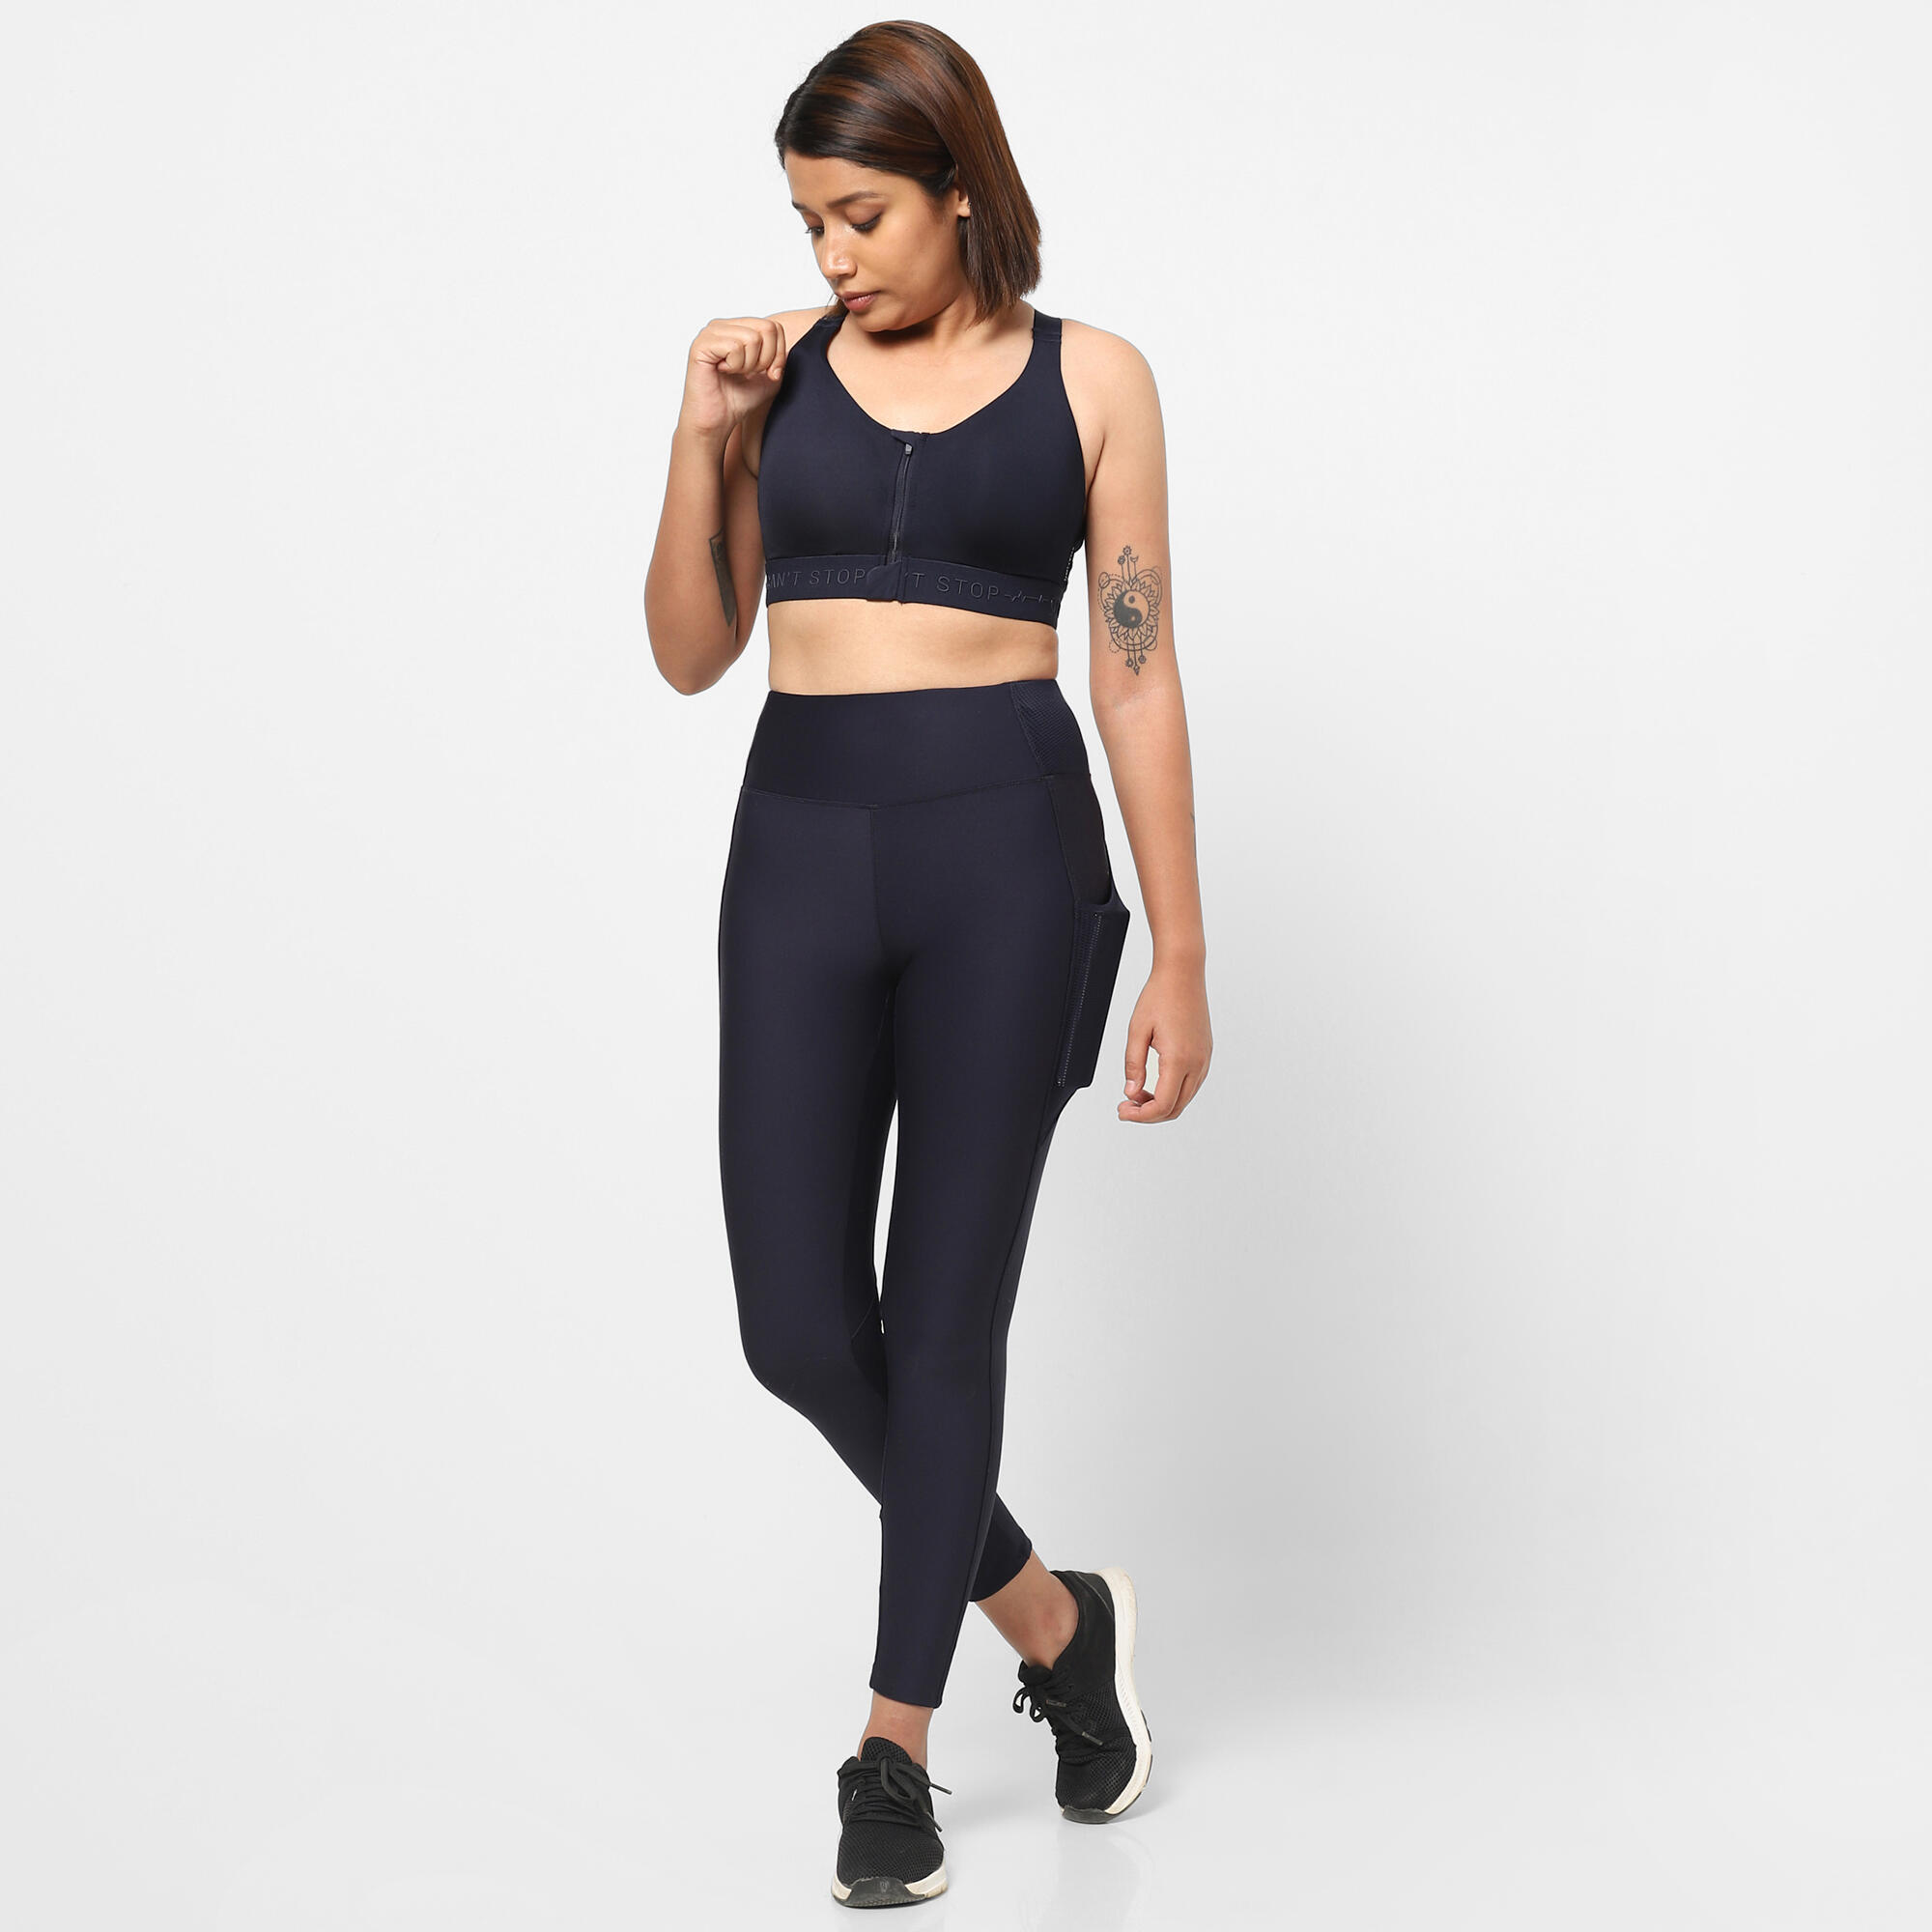 Fitness Women Leggings Pocket Solid High Waist Sexy Push Up Workout Cargo  Pants | eBay